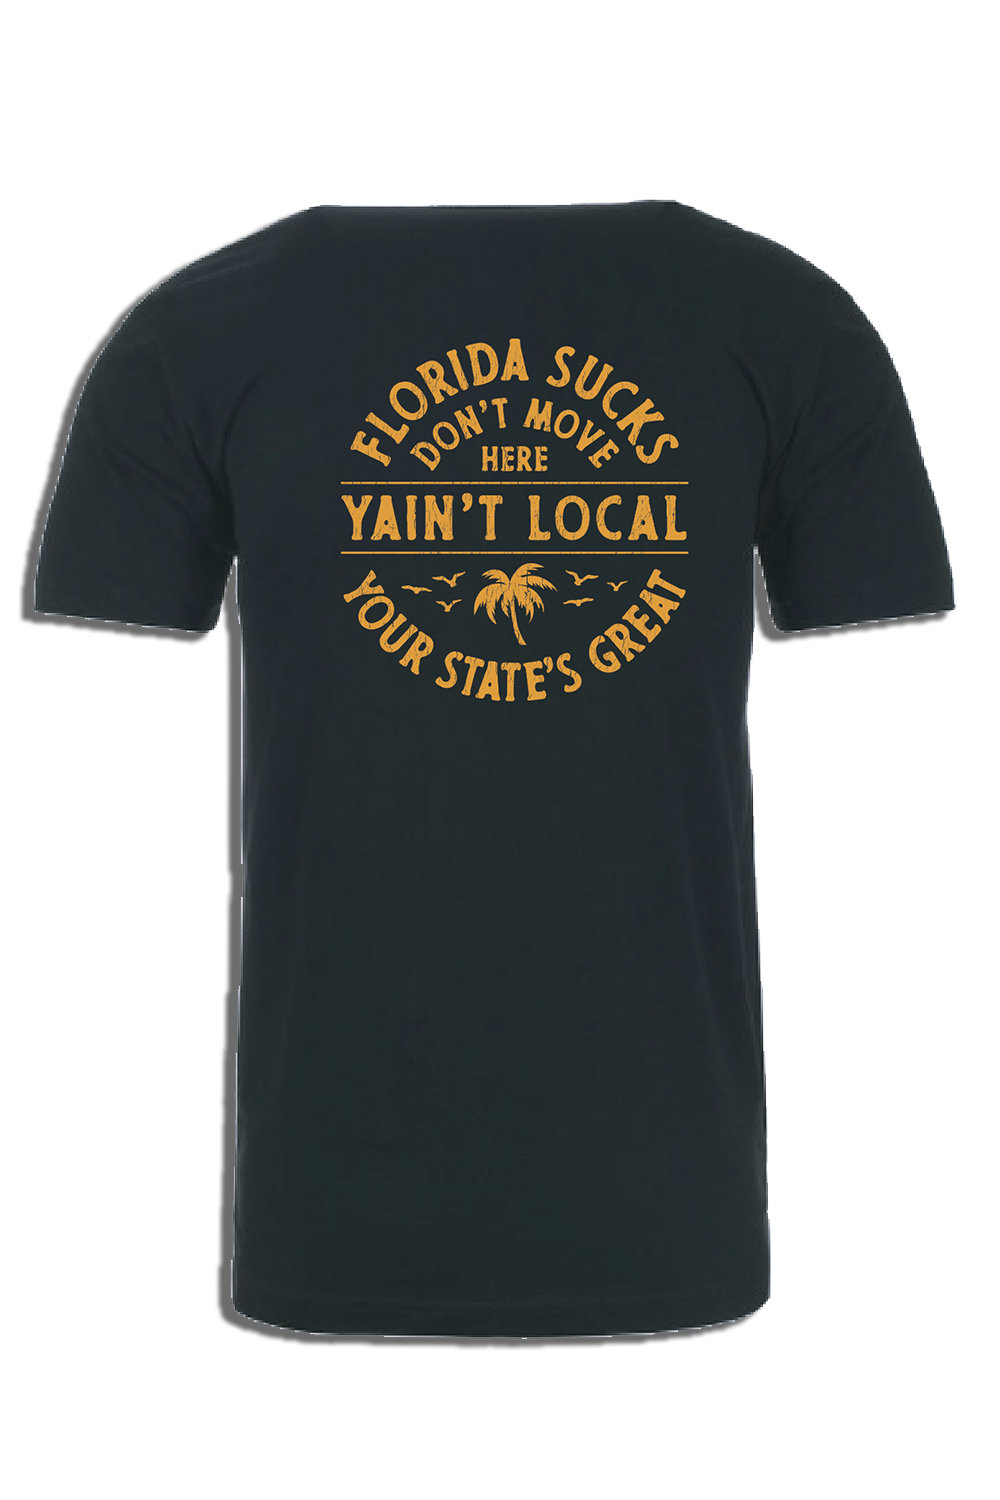 Yaint Local (Last Local) Florida Sux Tee - Black